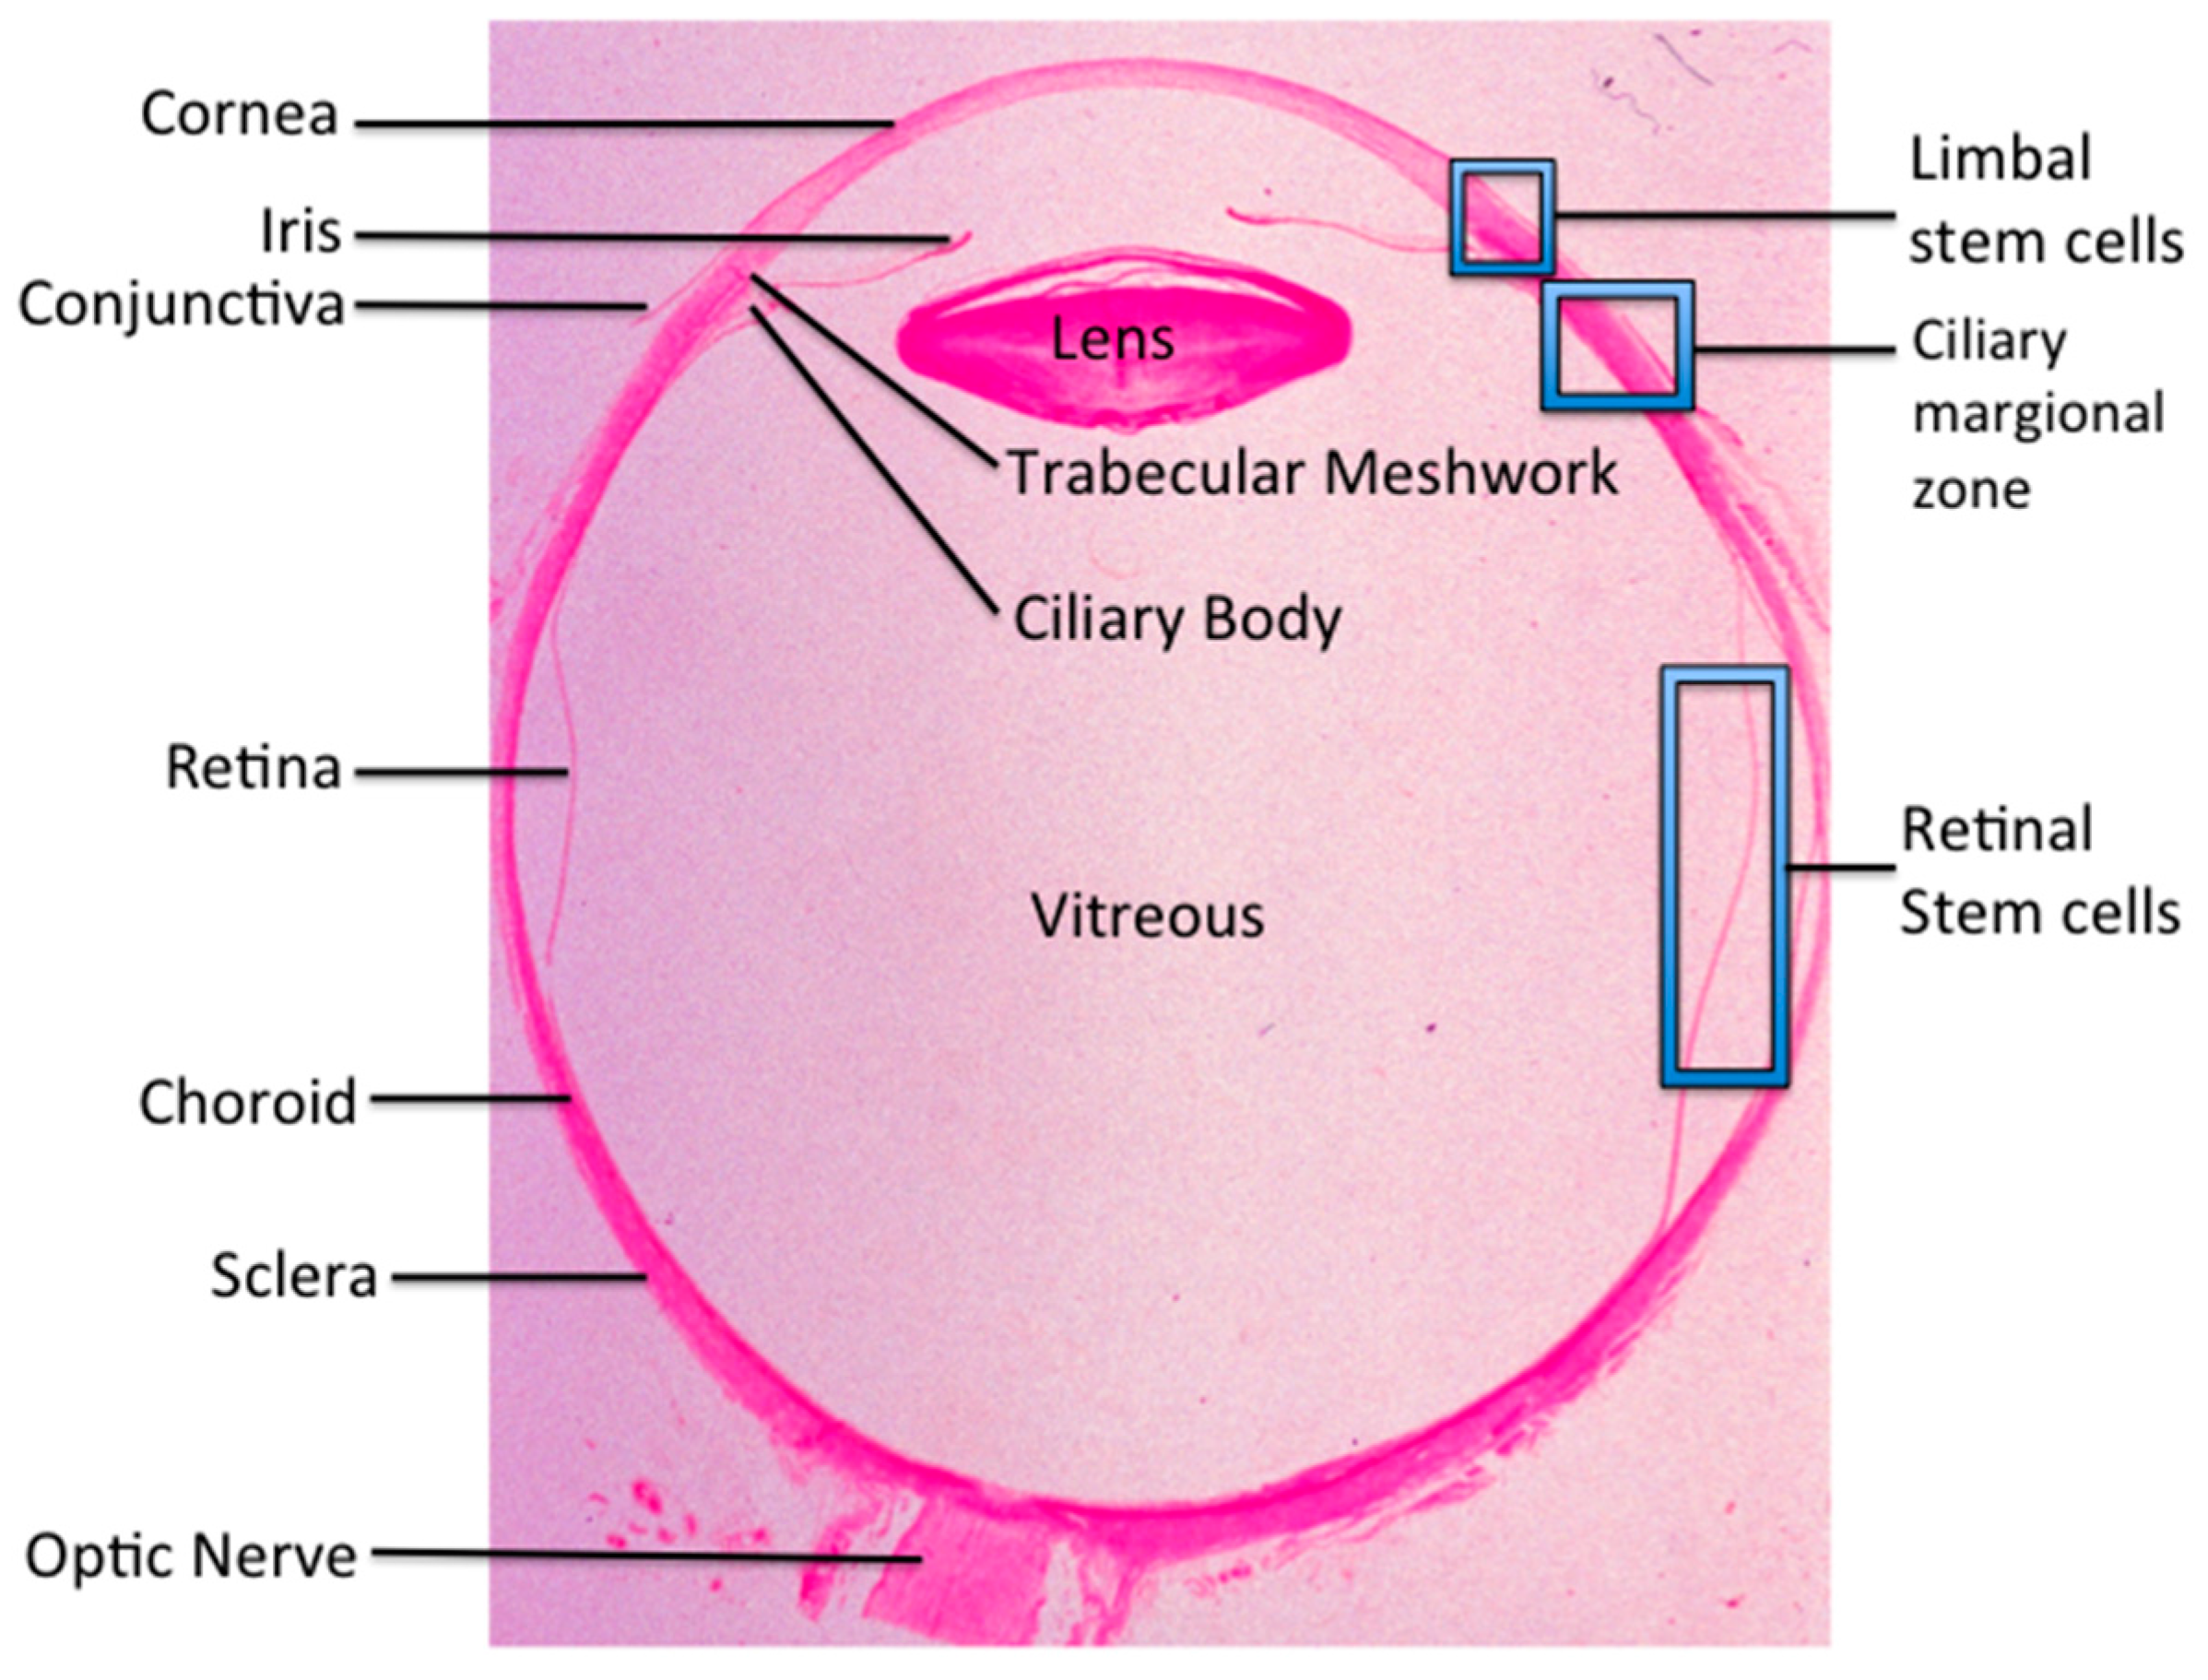 Limbus Histology